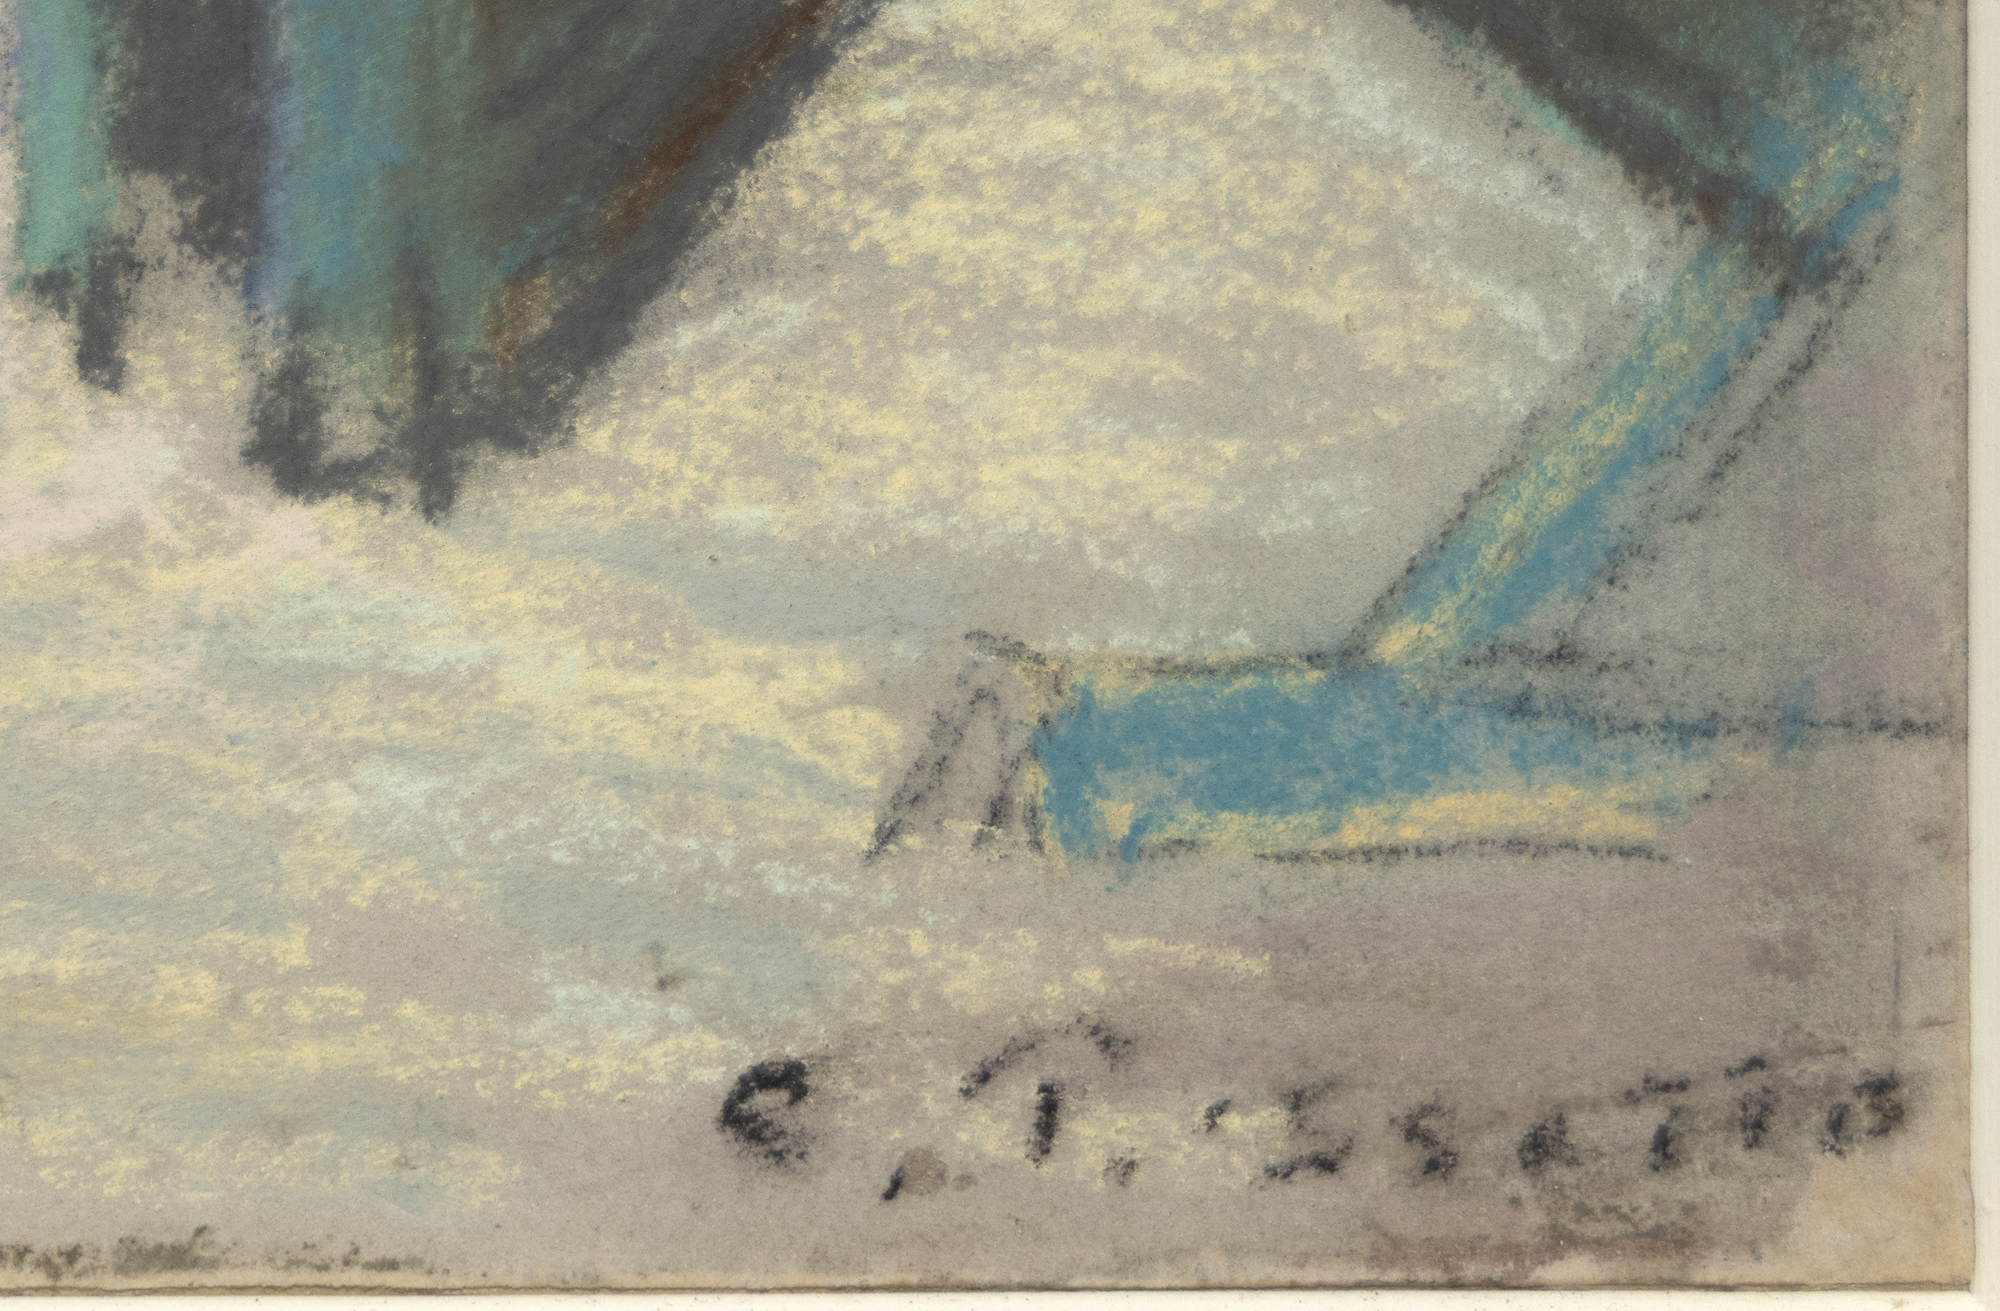 CAMILLE PISSARRO - Paysage avec batteuse a Montfoucault - pastel on paper laid down on board - 10 3/8 x 14 3/4 in.